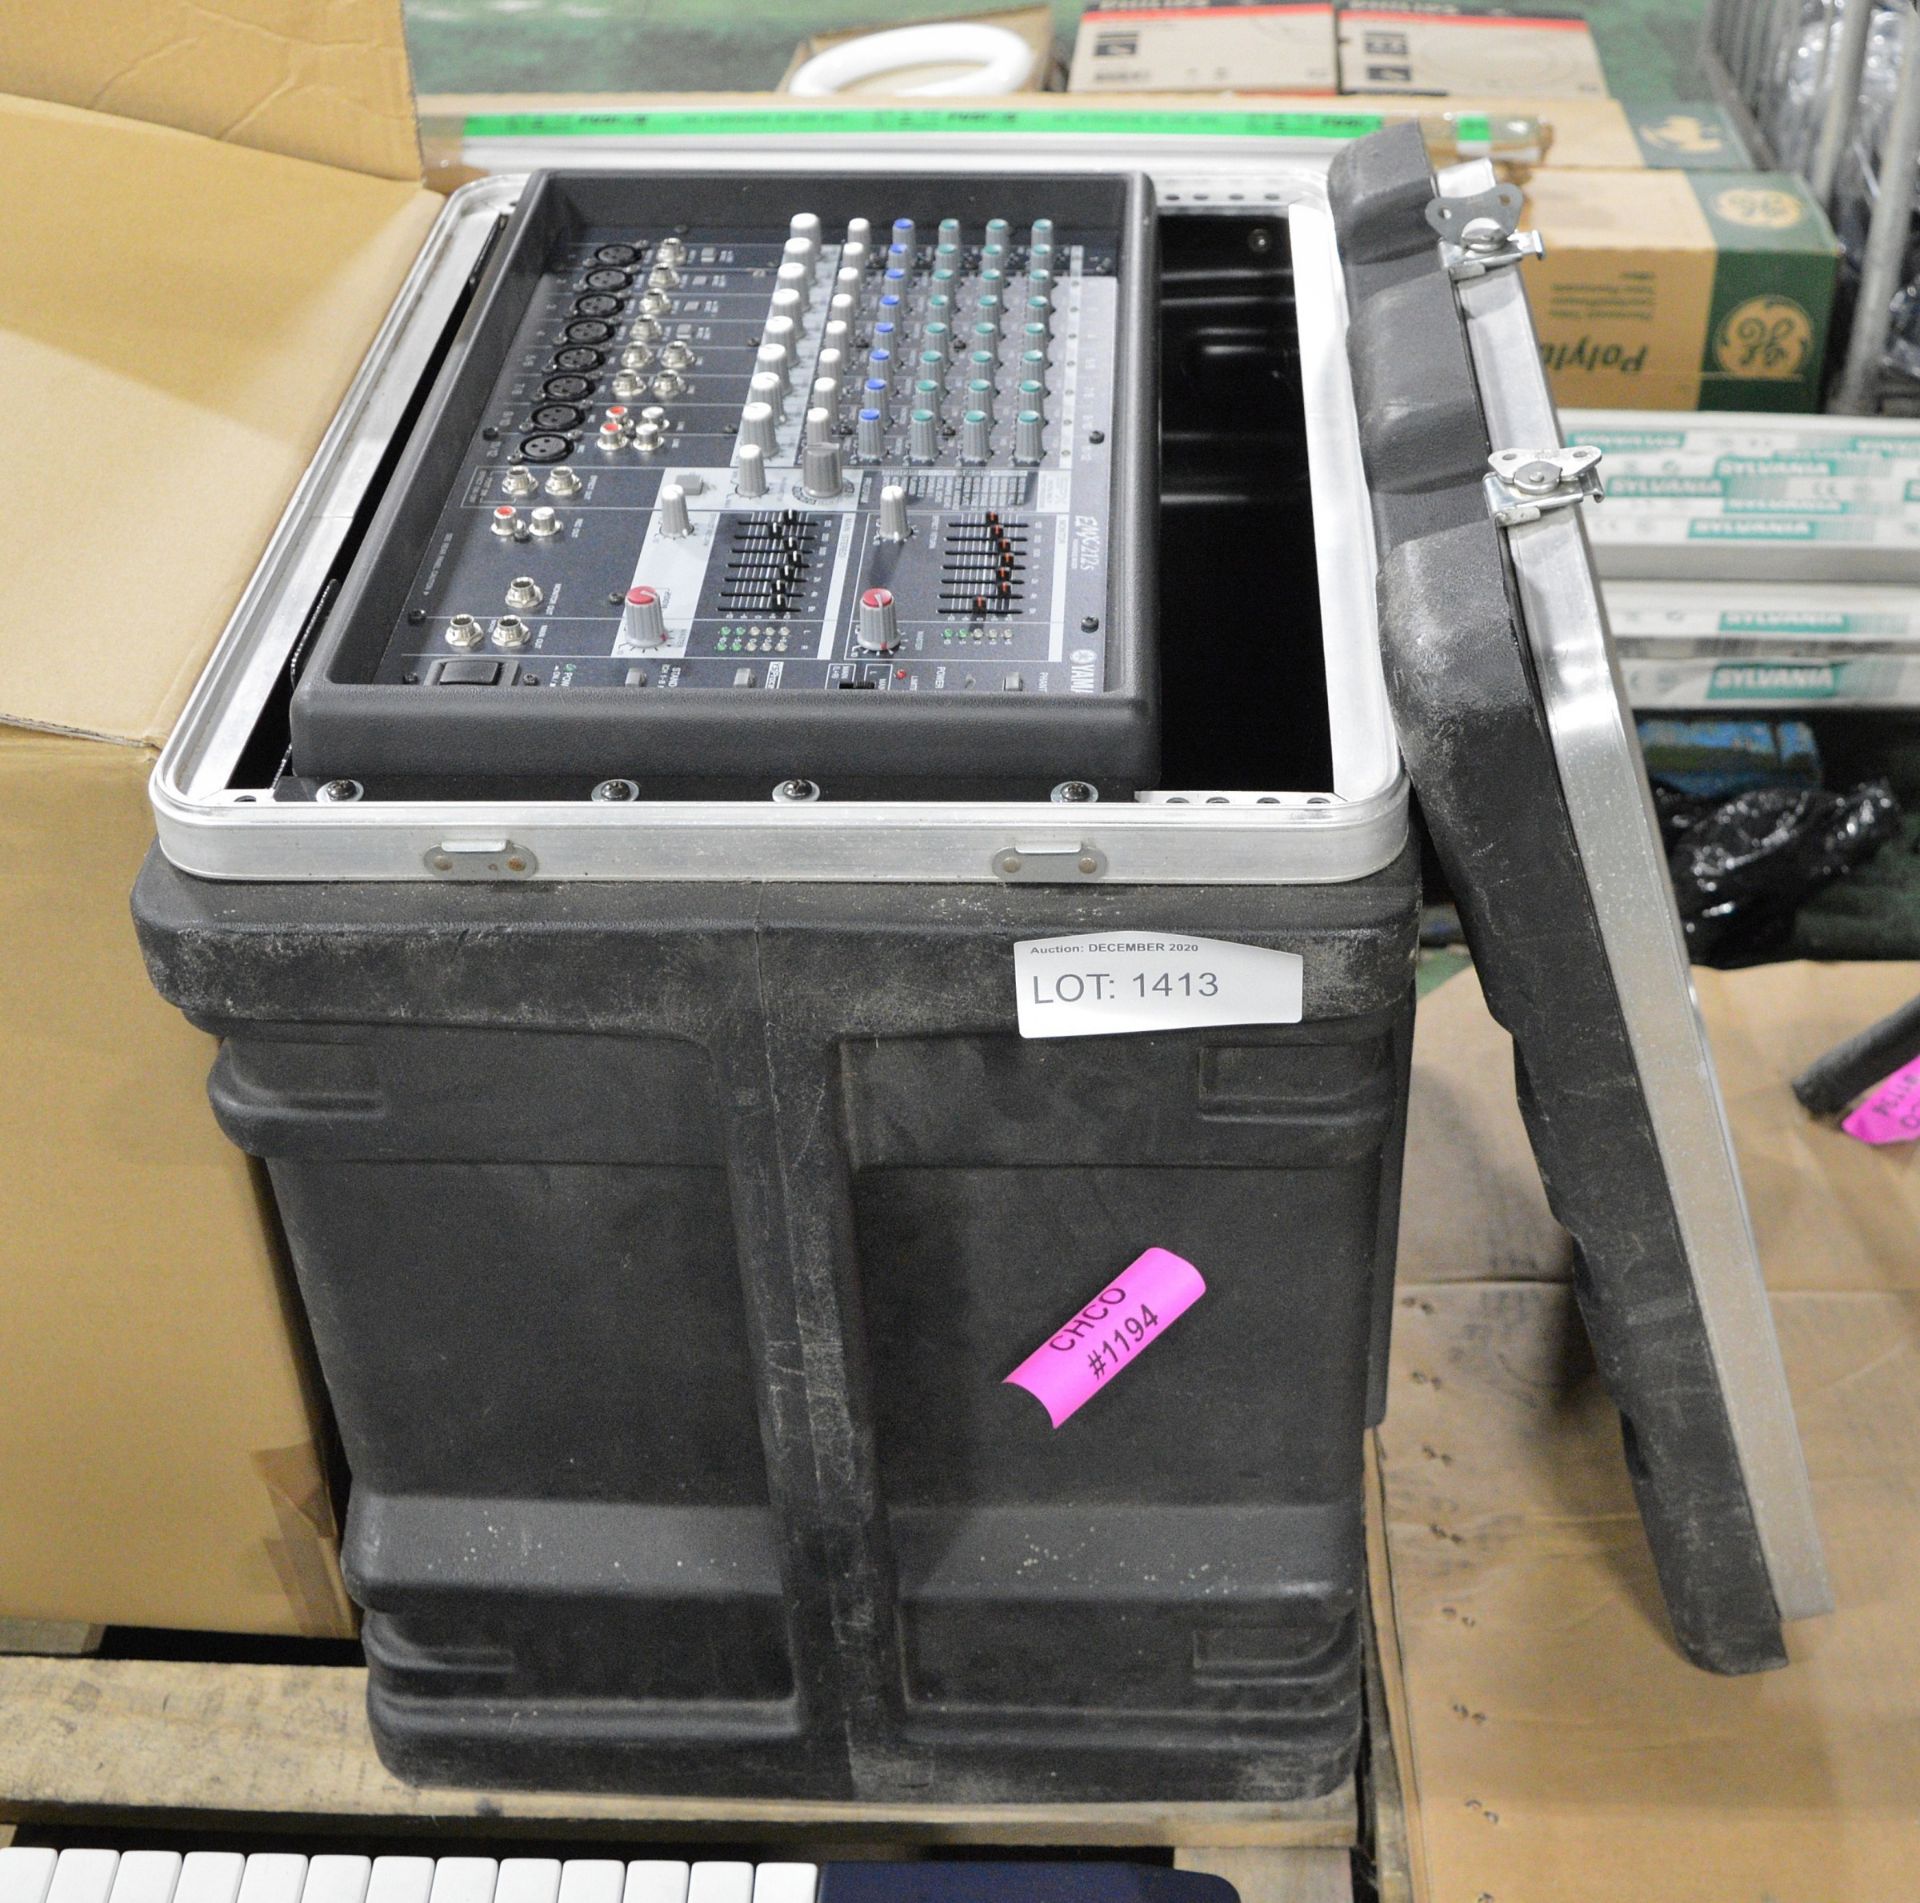 Yamaha EMX 212s Mixing panel in transit case - Image 3 of 3